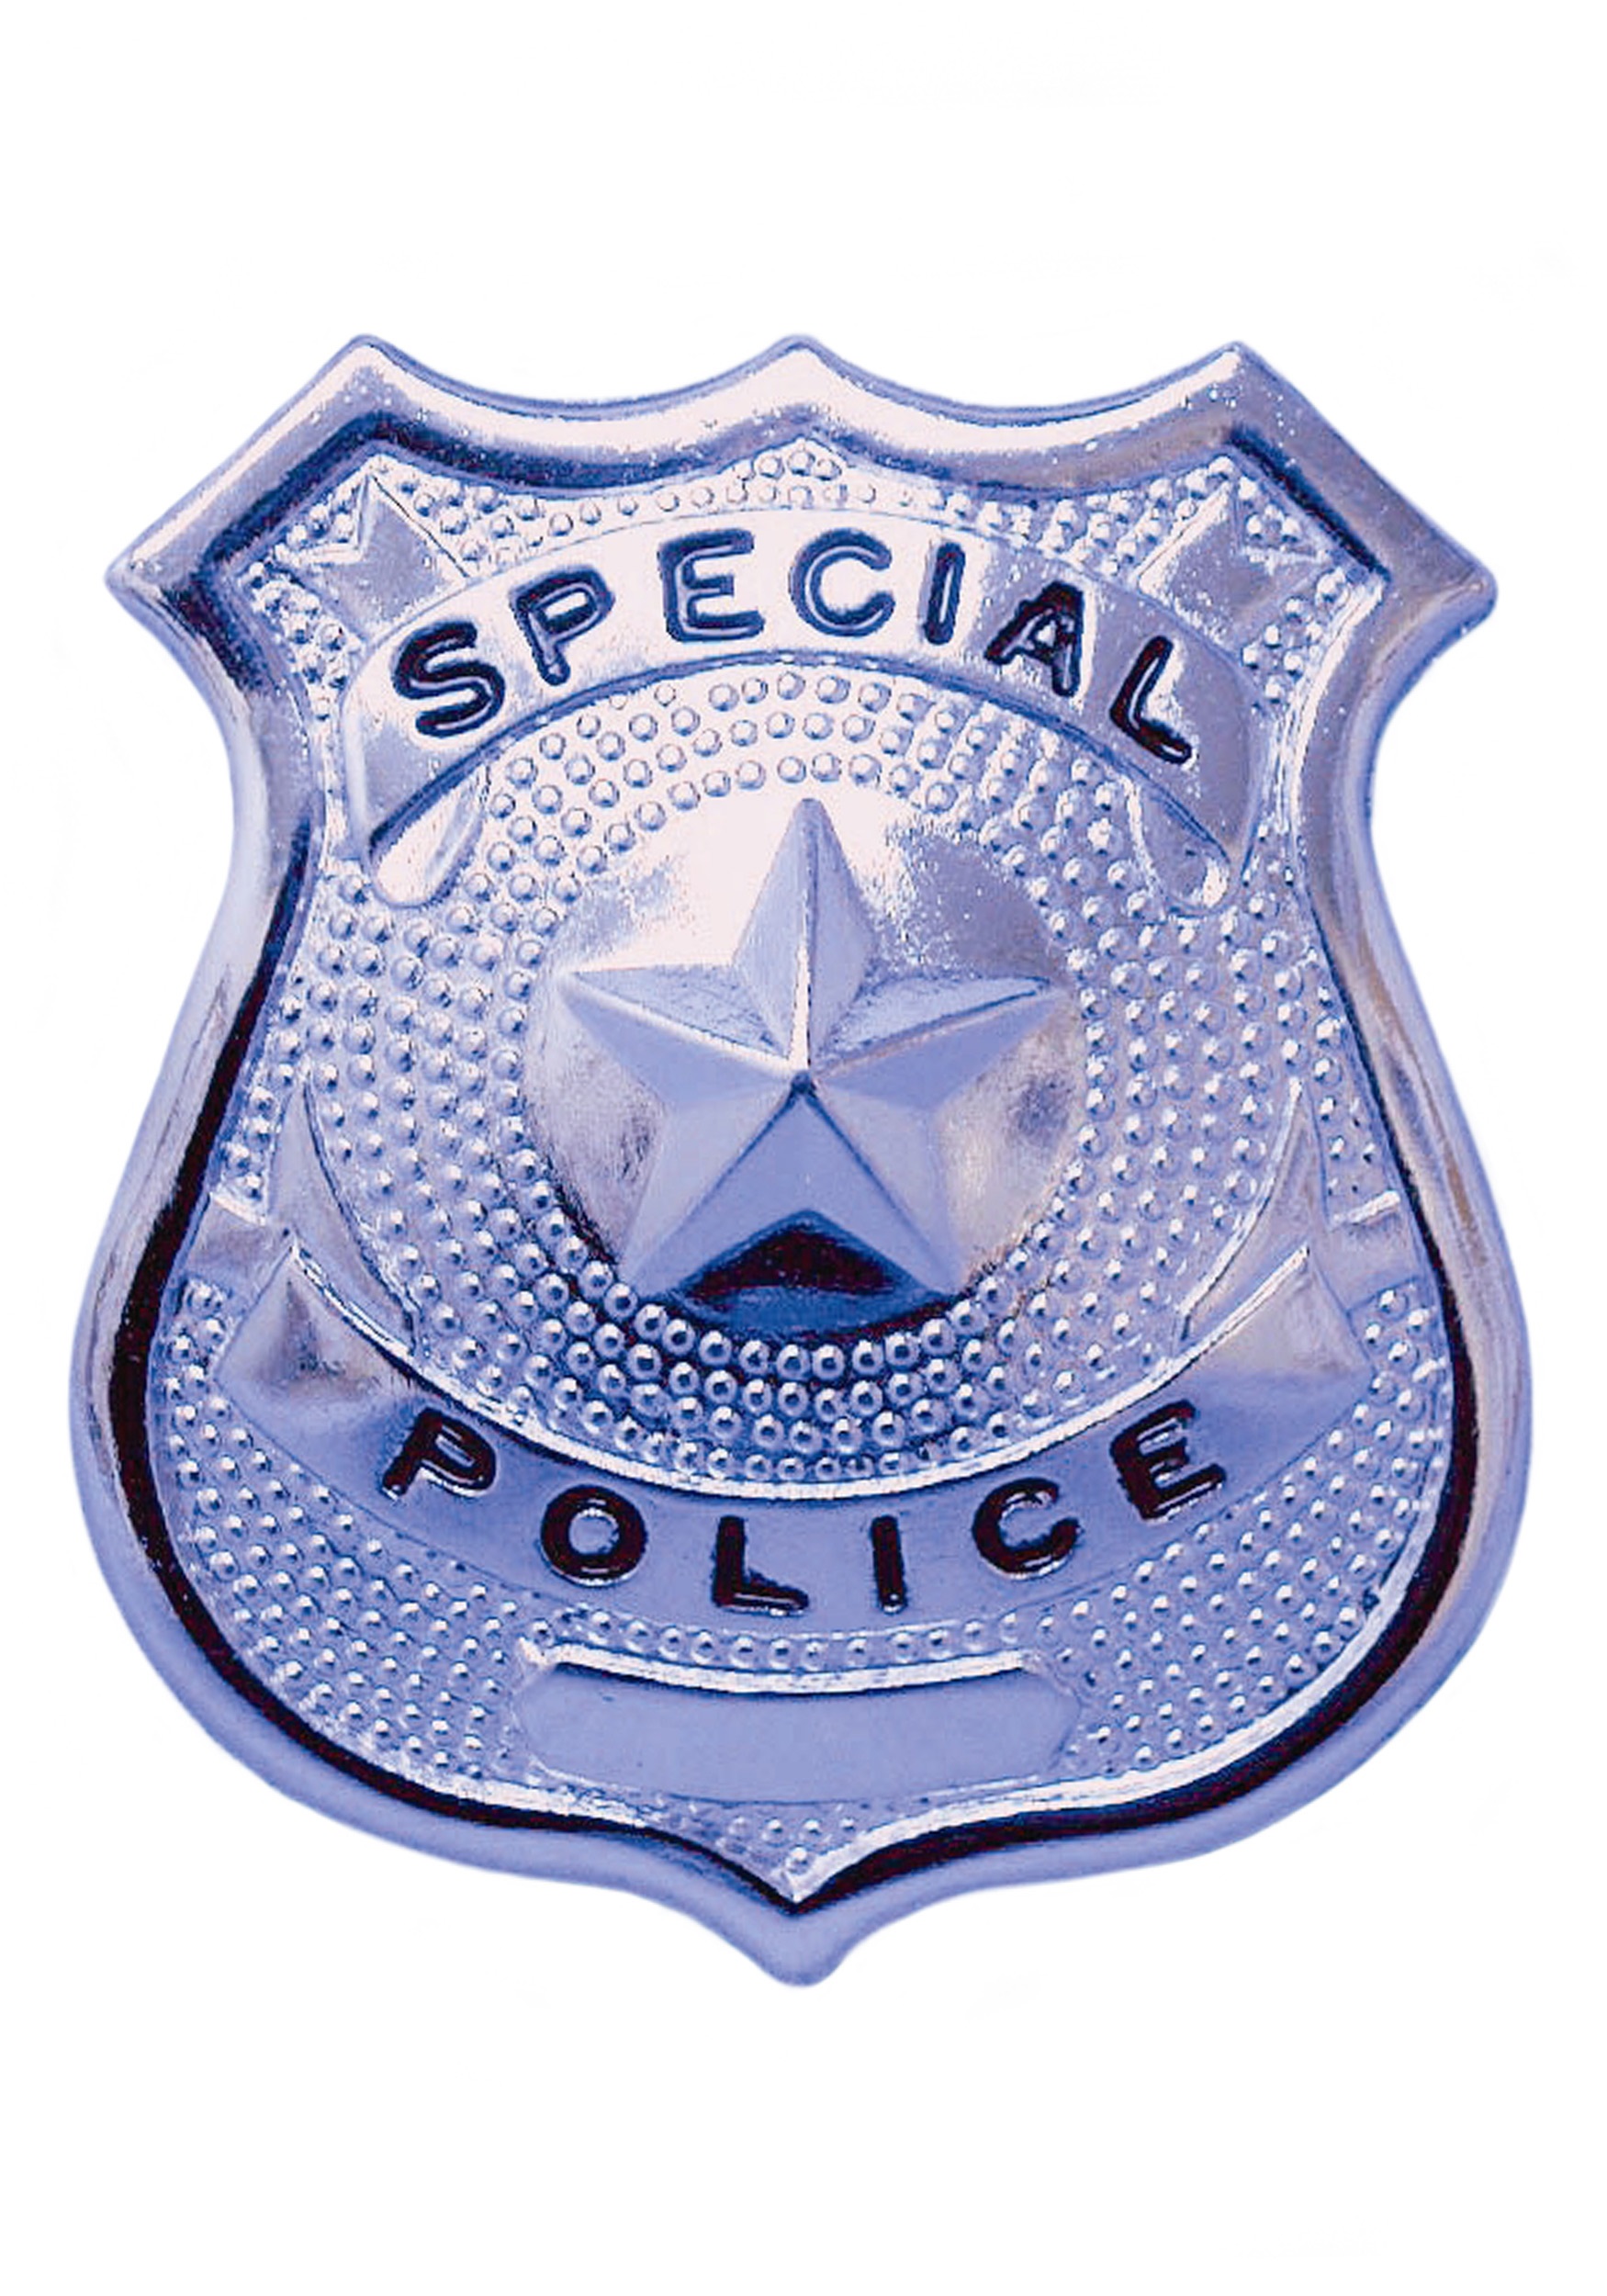 Authentic Cop Toy Badge